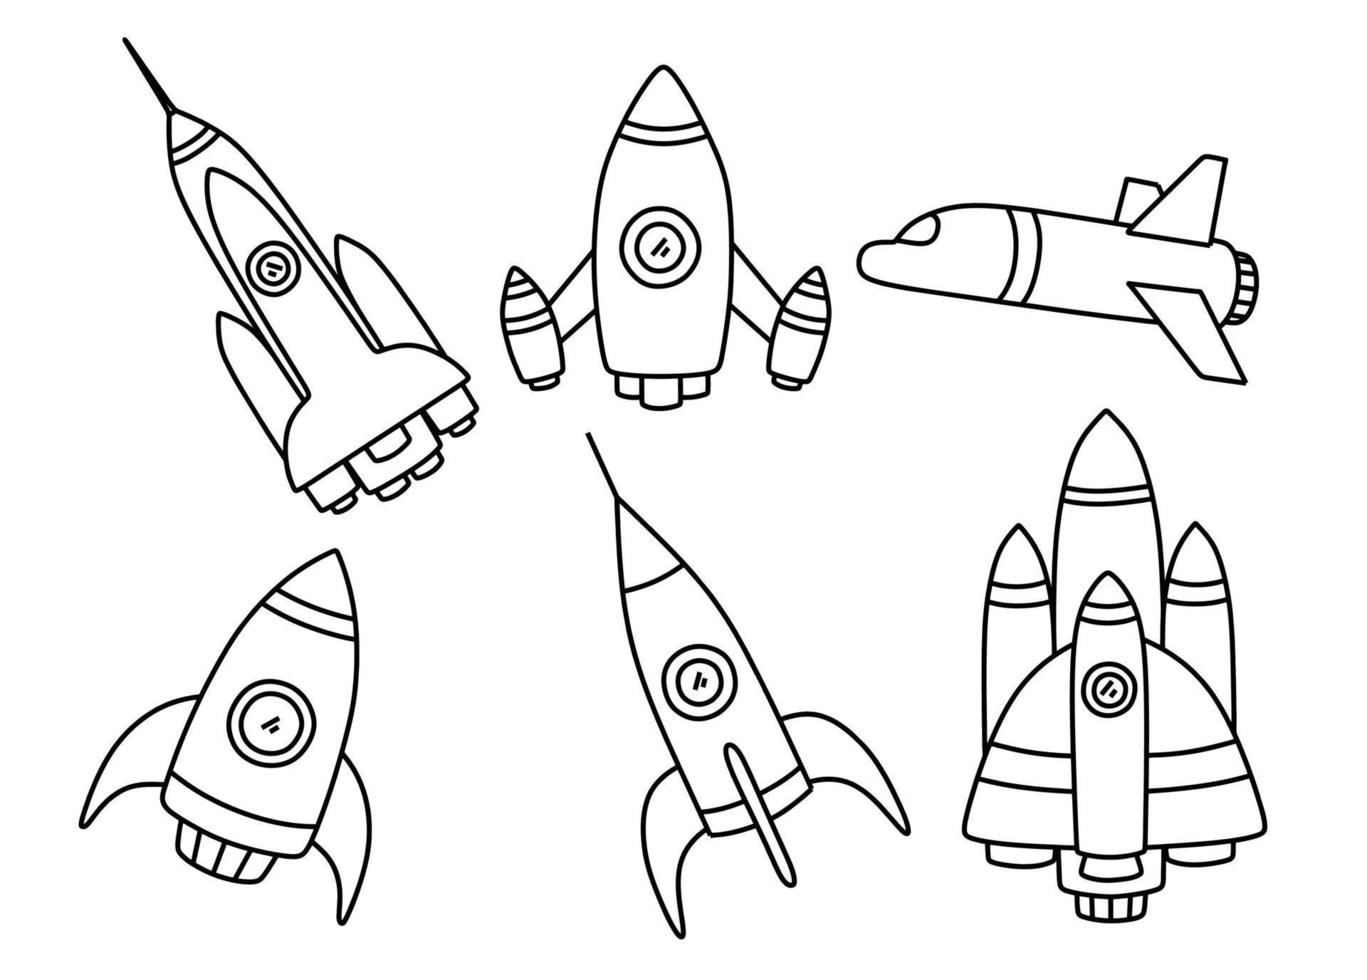 Doodle set of cute rocket. vector